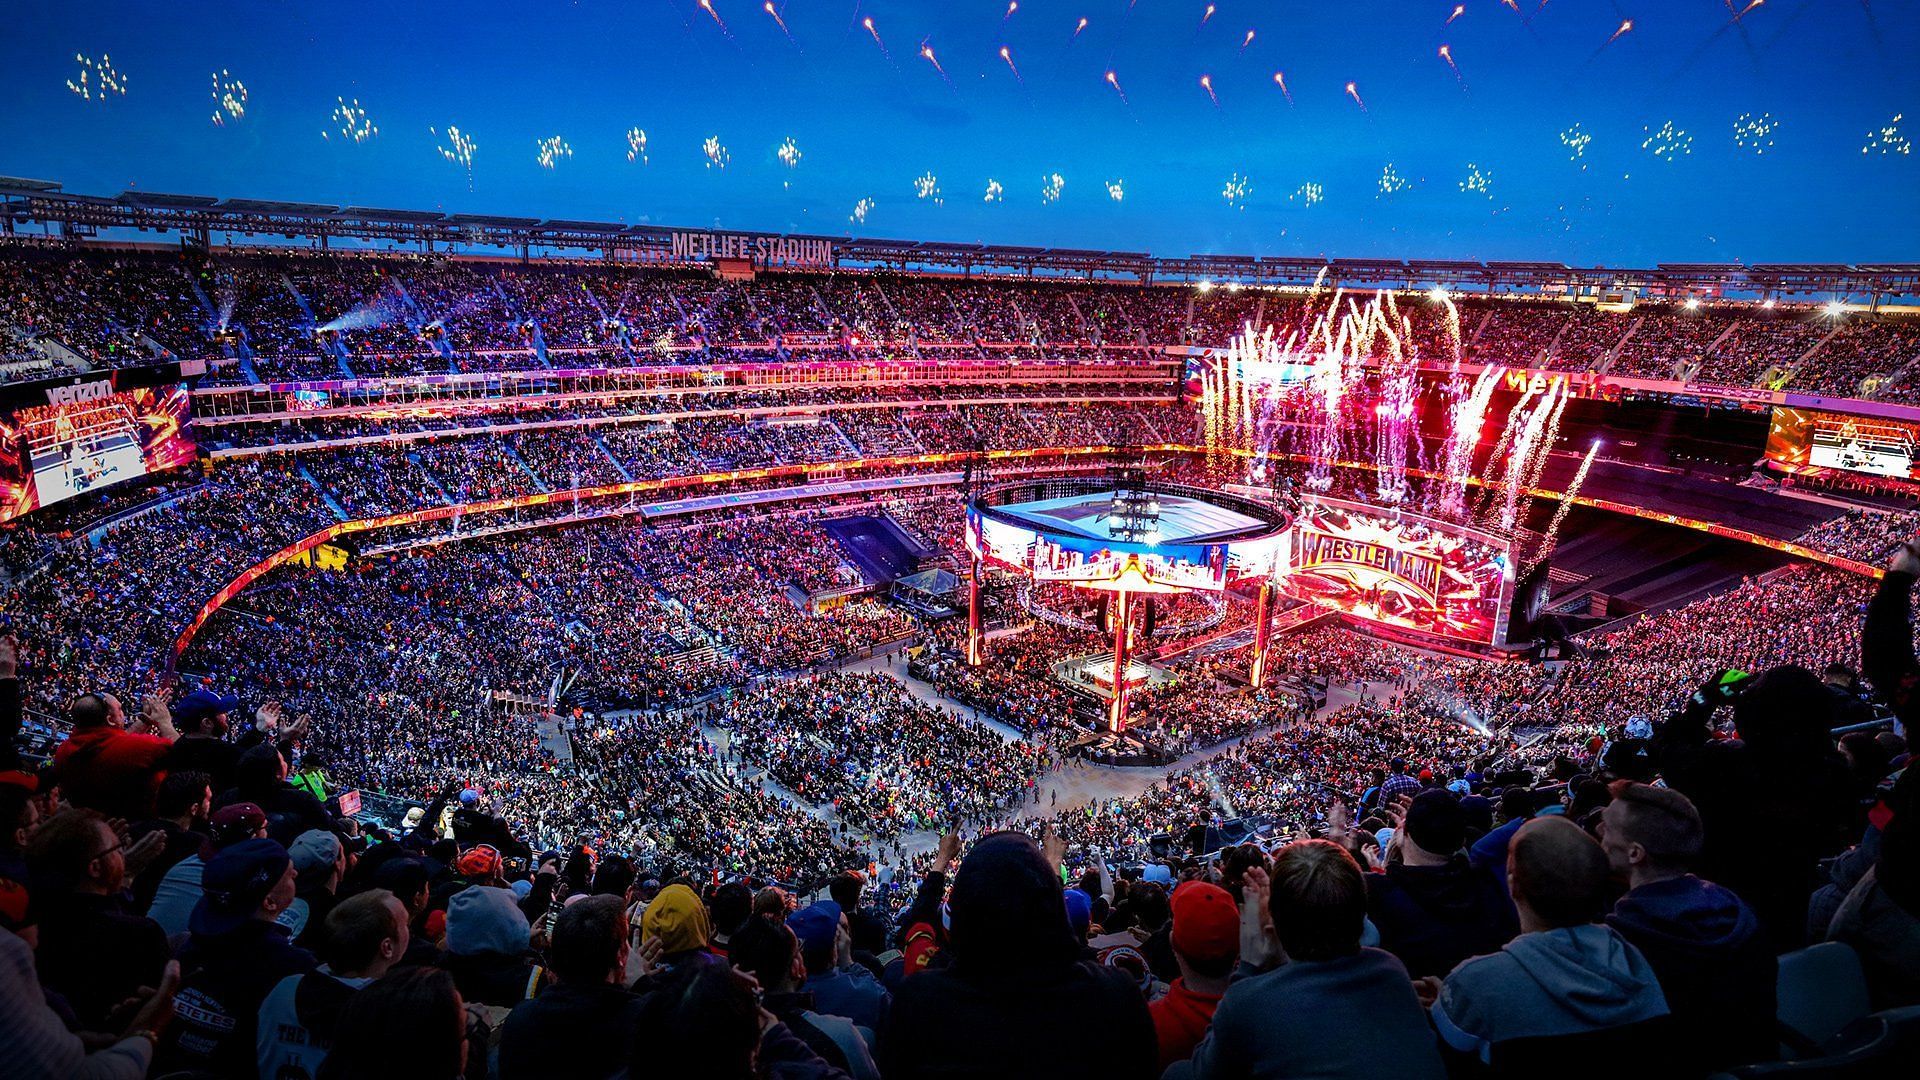 The WWE Universe packs stadium for WrestleMania